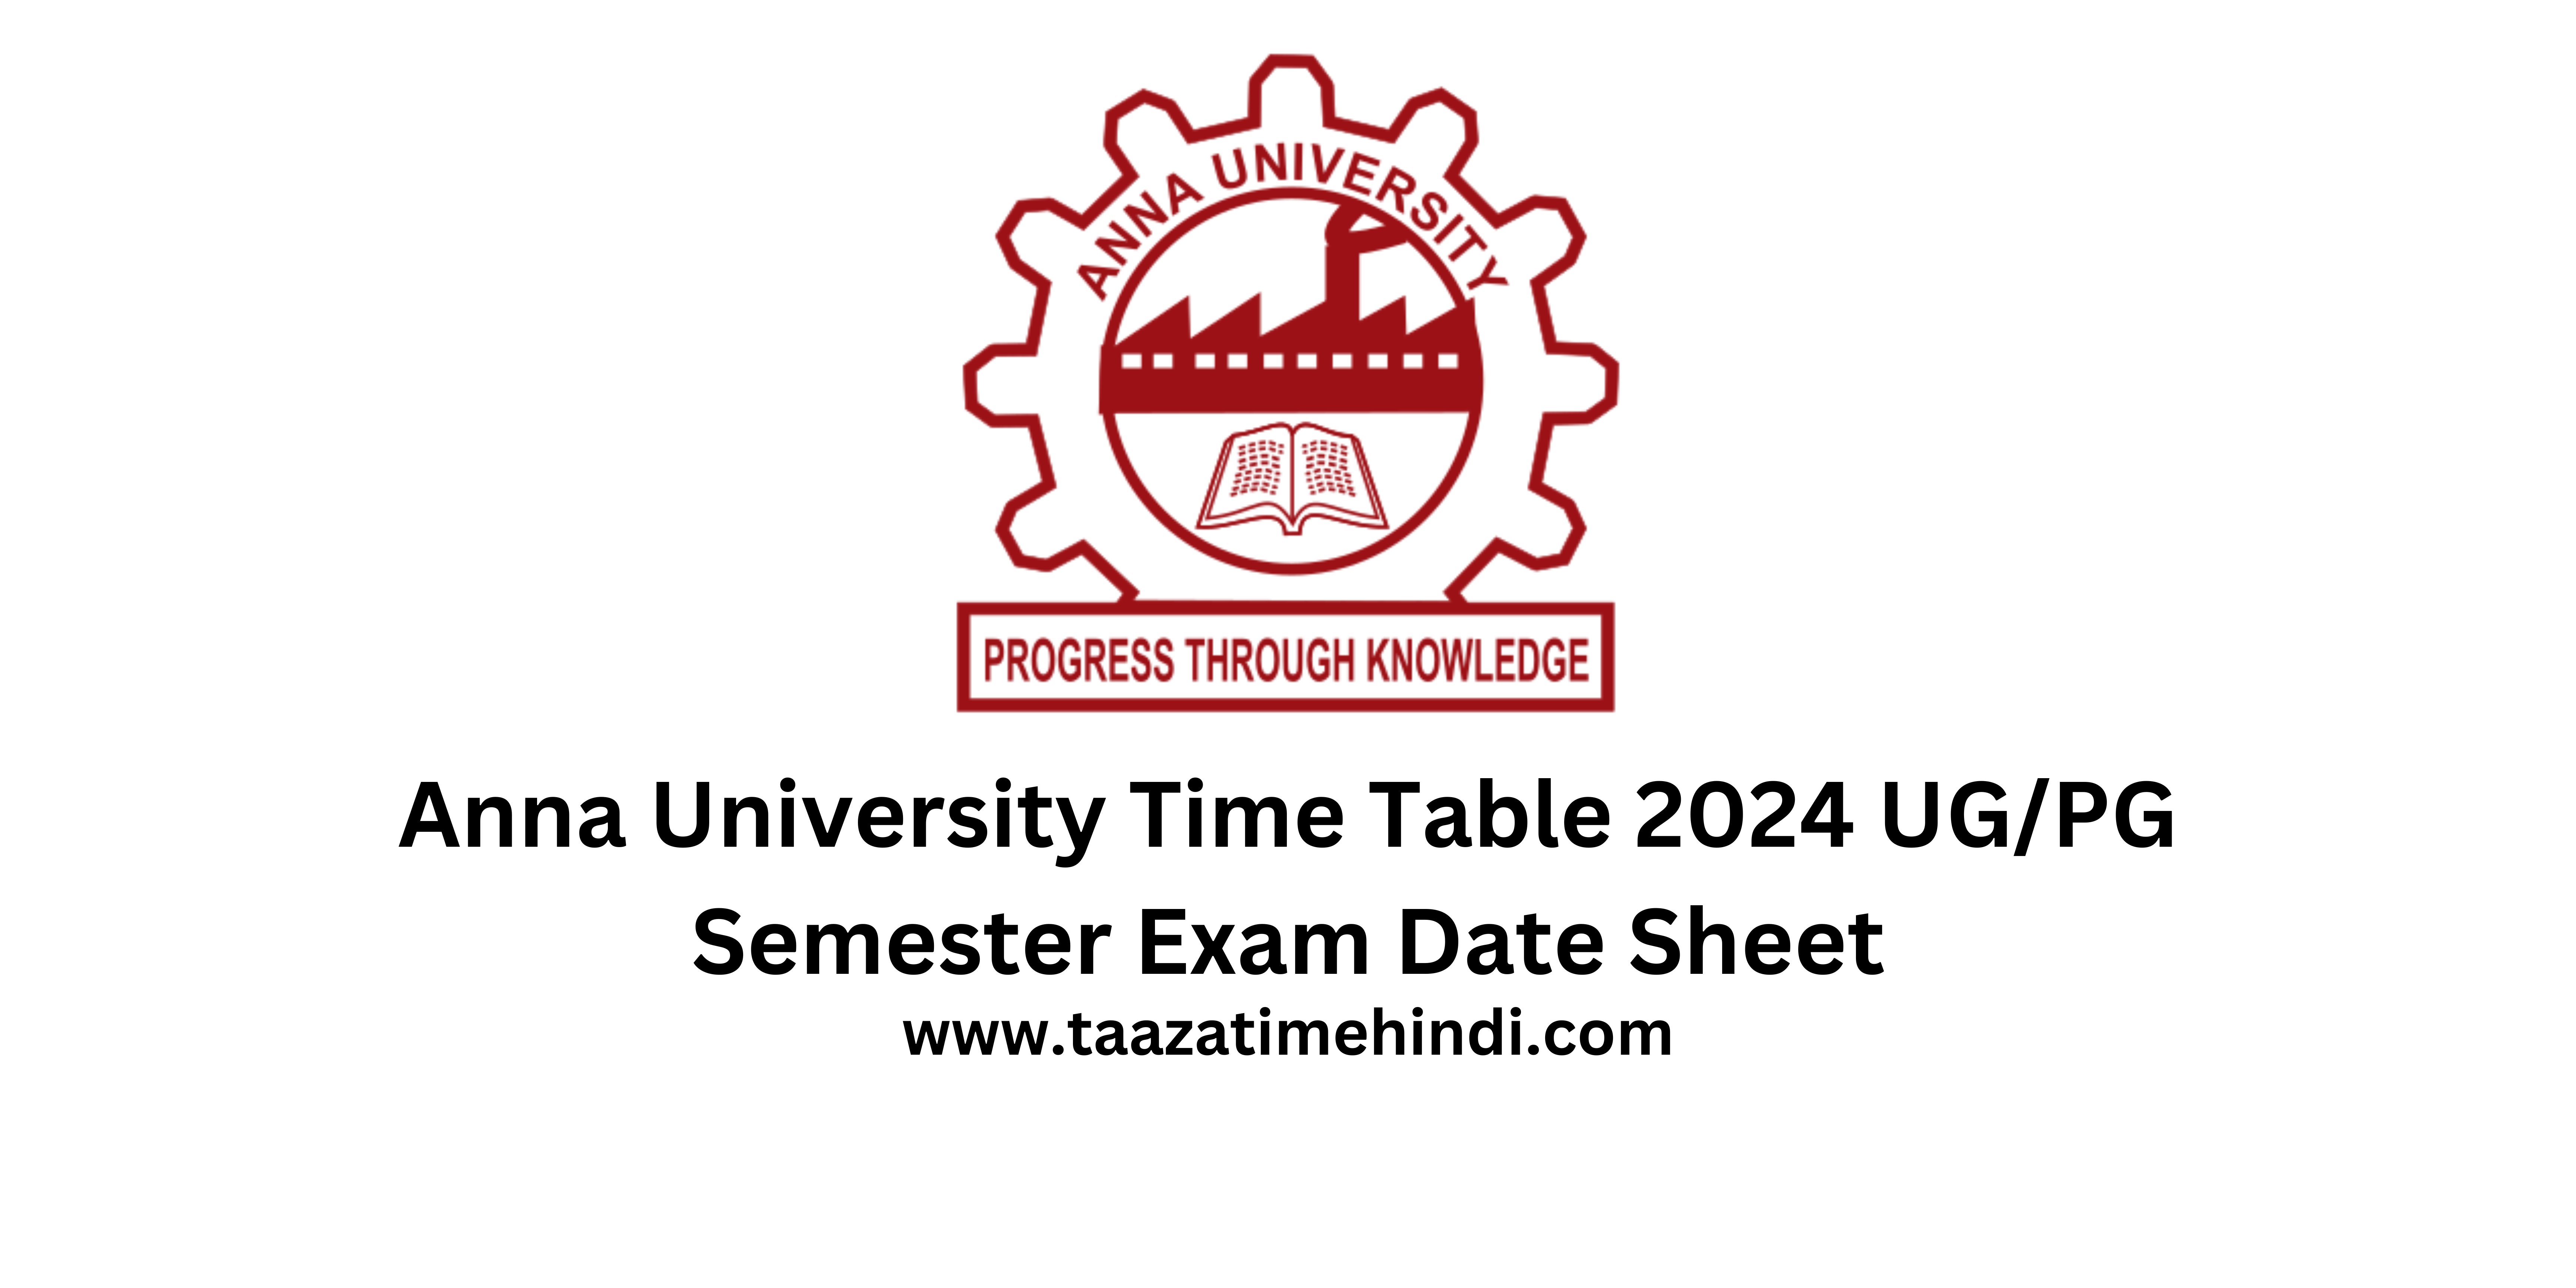 Anna University Time Table 2024 UG/PG Semester Exam Date Sheet